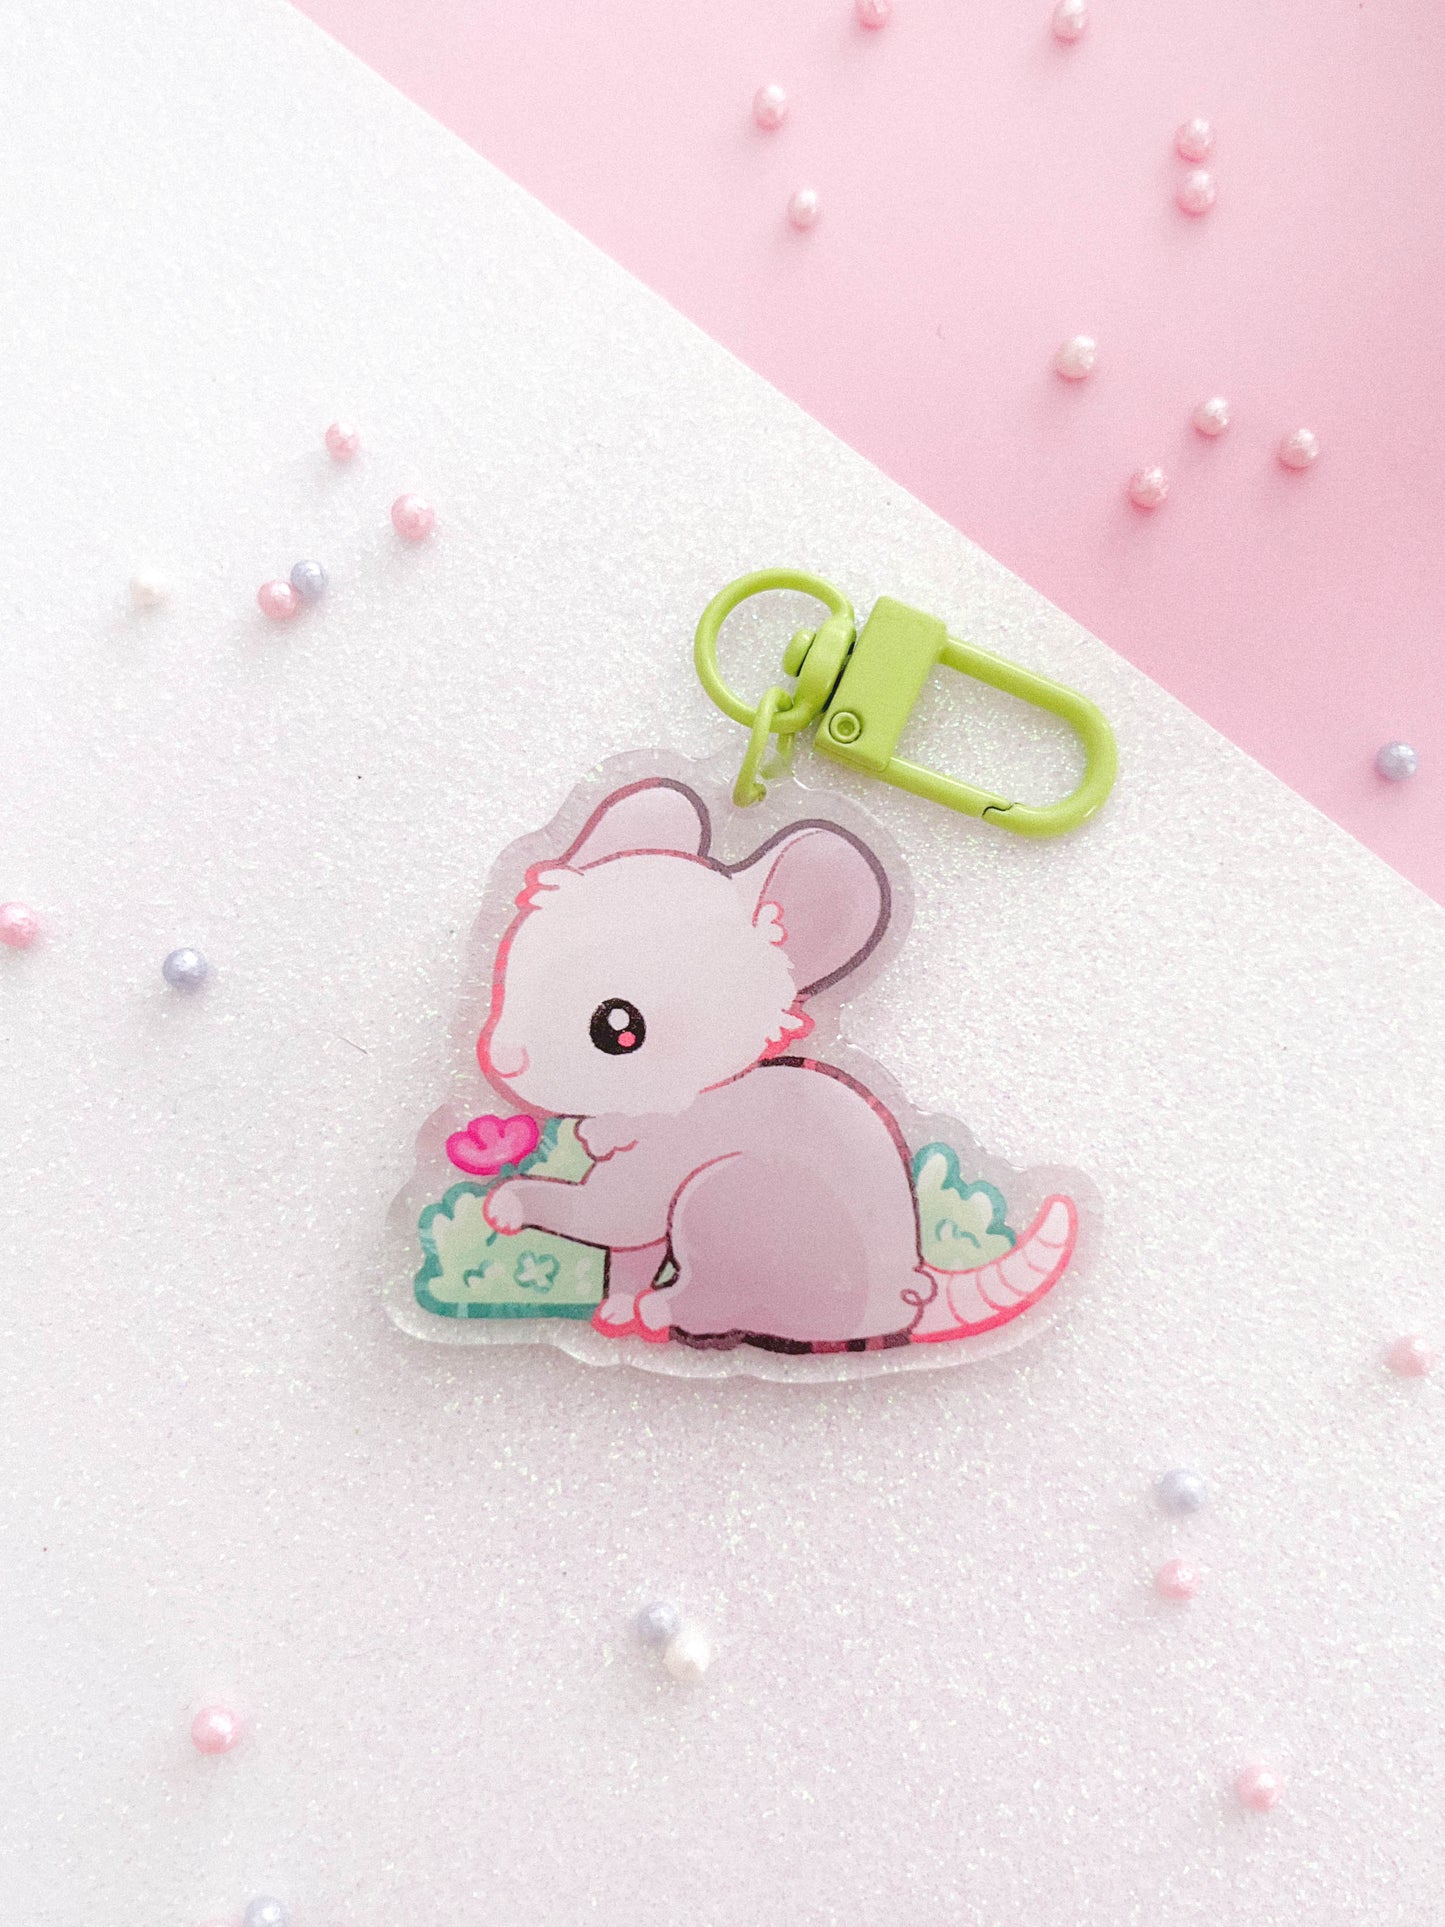 Opossum Acrylic Keychain | Cute Animal Art | Opossum Key Charm | Kawaii Mouse | Aesthetic Birthday Gift for Her | Christmas Present